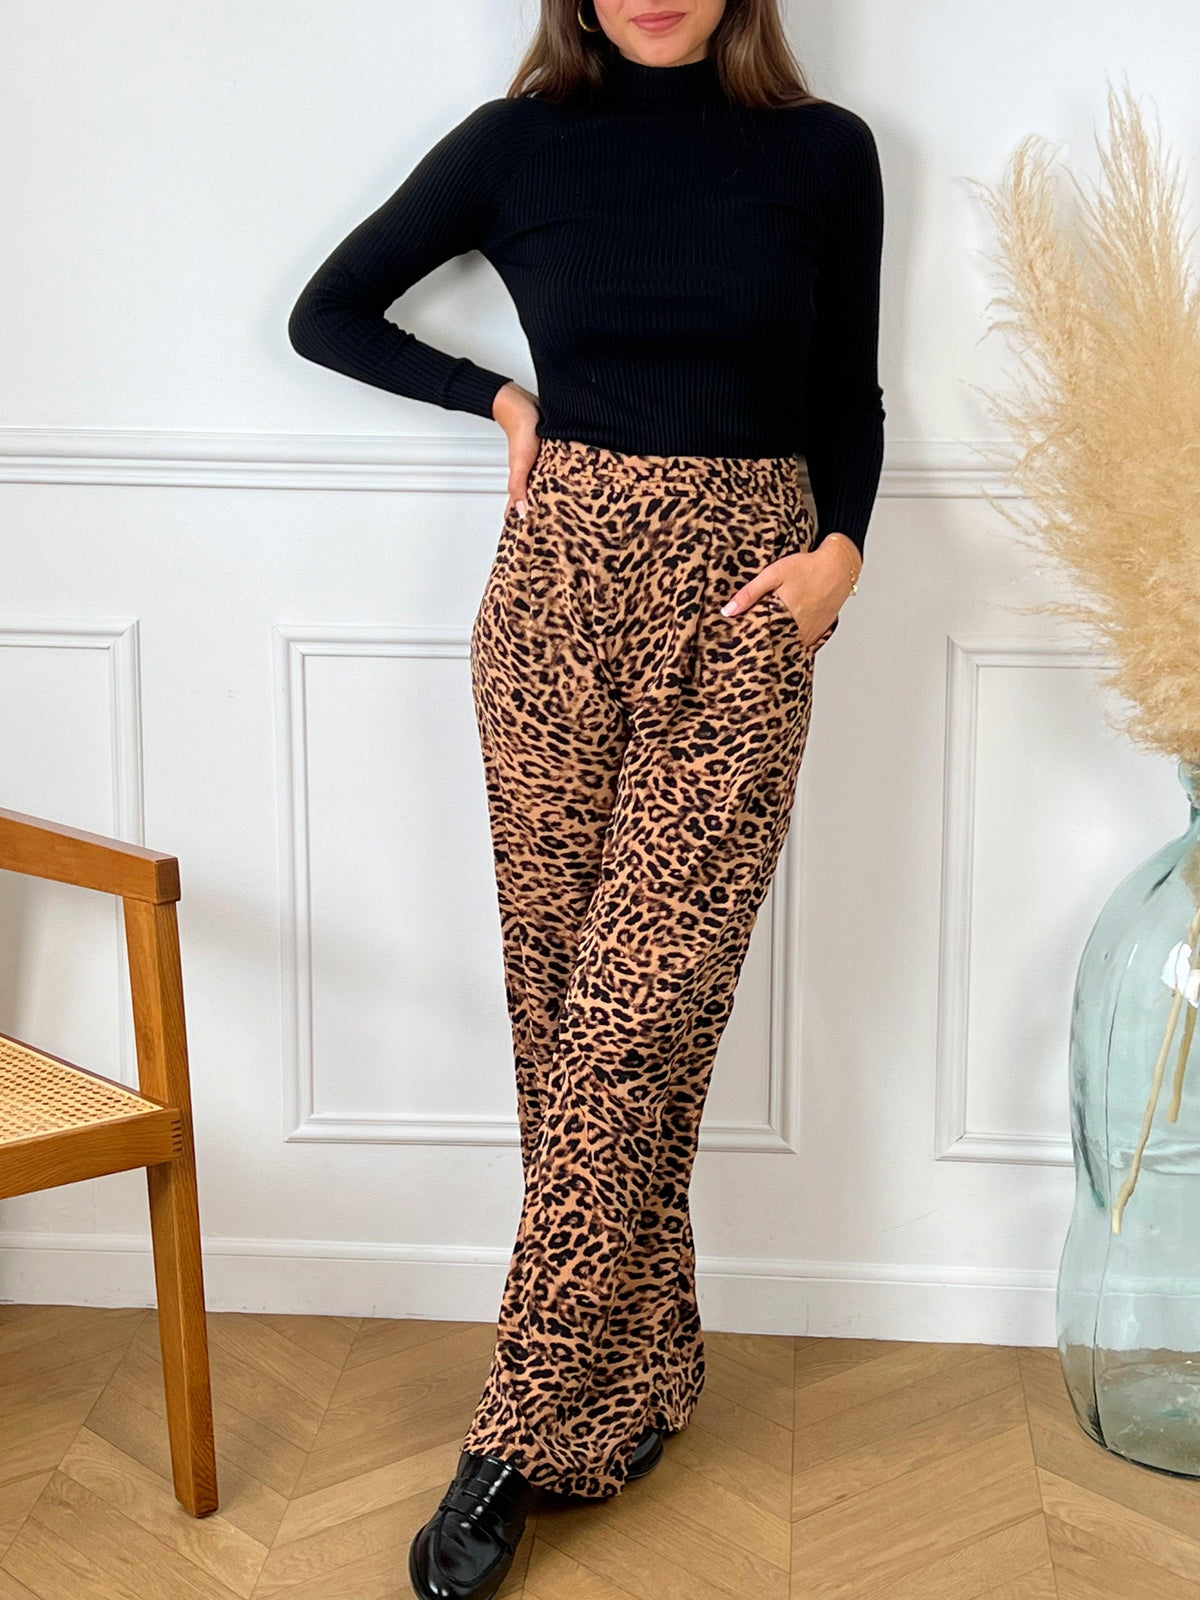 Pantalon motif léopard : Noalie - Loïcia